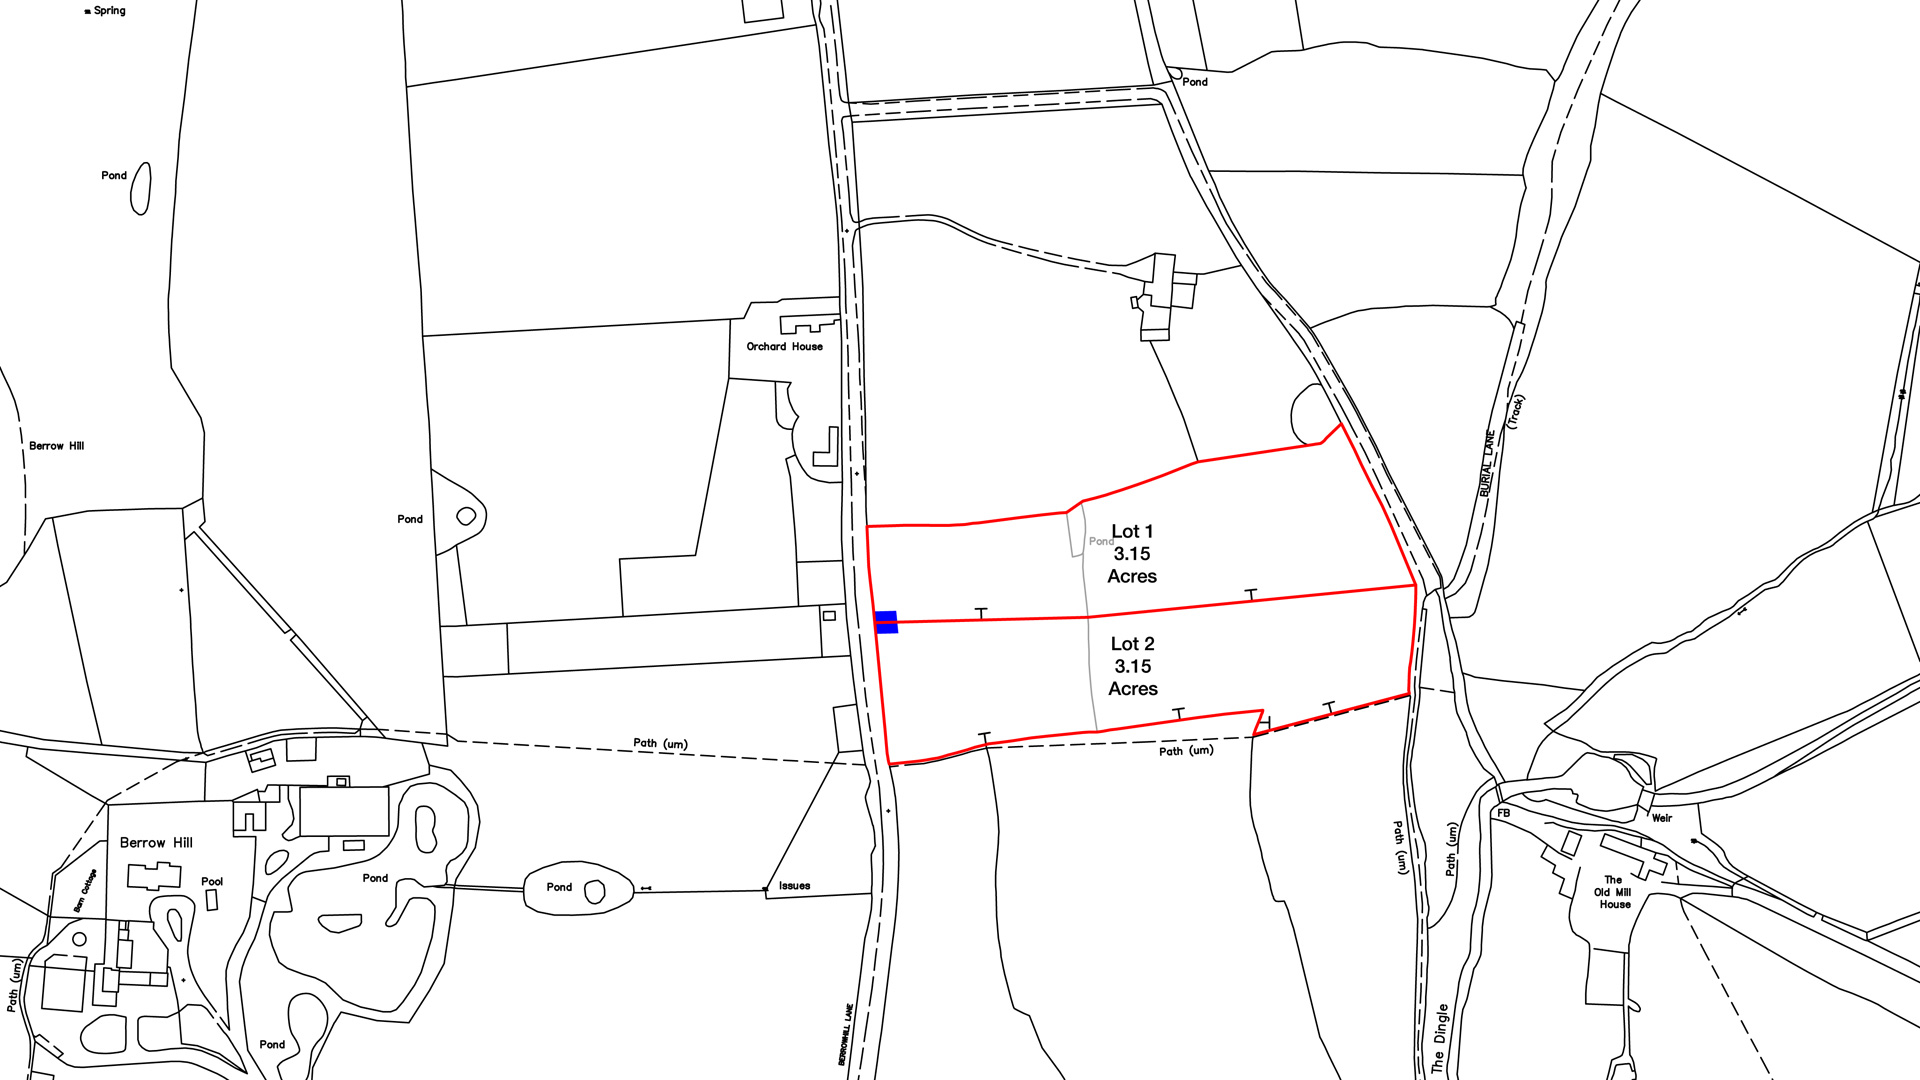 Land for sale at Berrowhill View in Feckenham, Redditch site plan